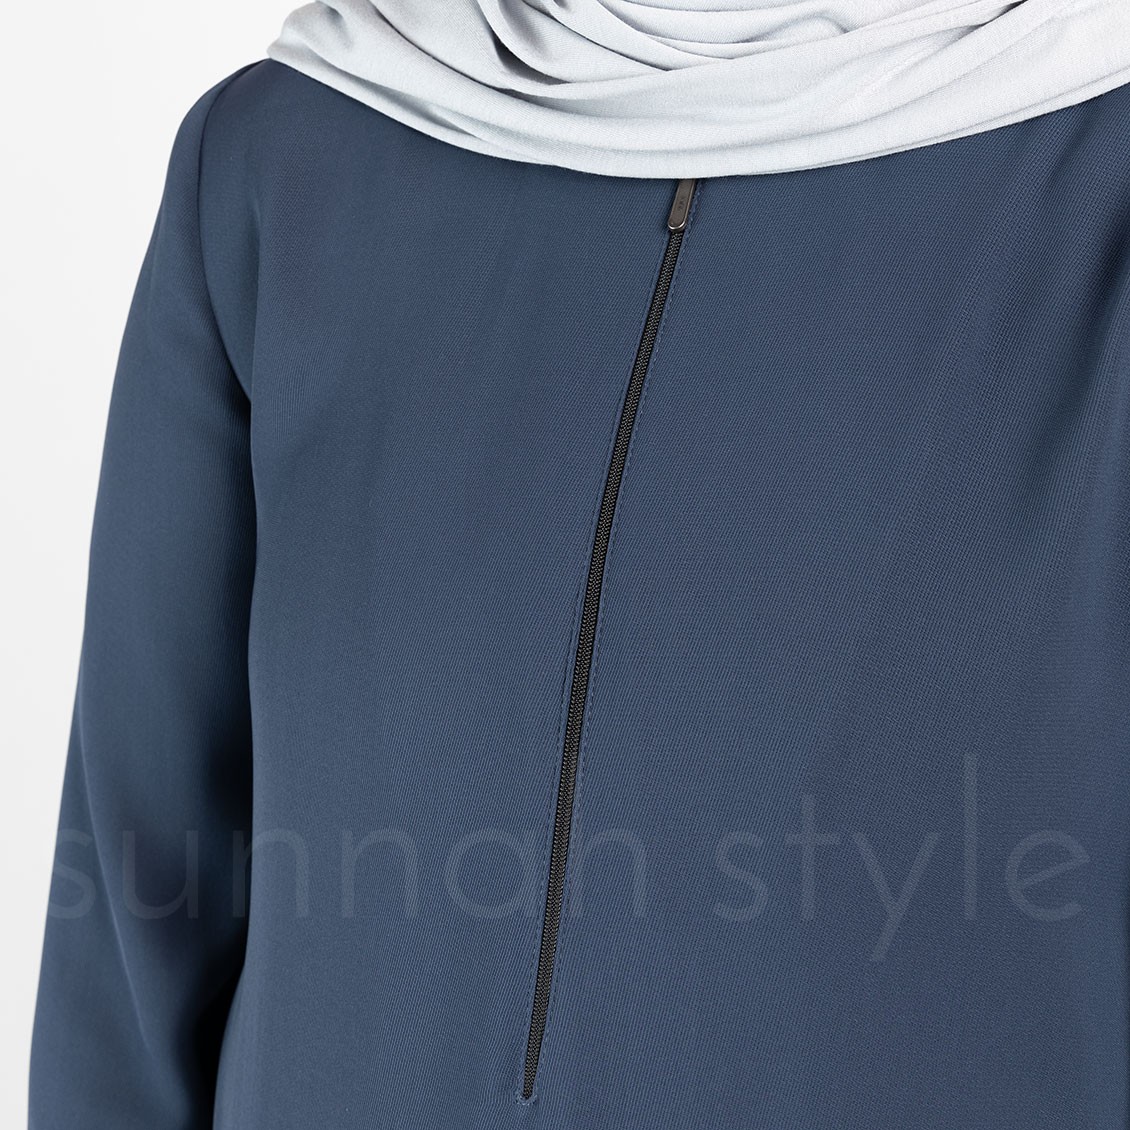 Sunnah Style Essentials Closed Abaya Slim Steel Blue